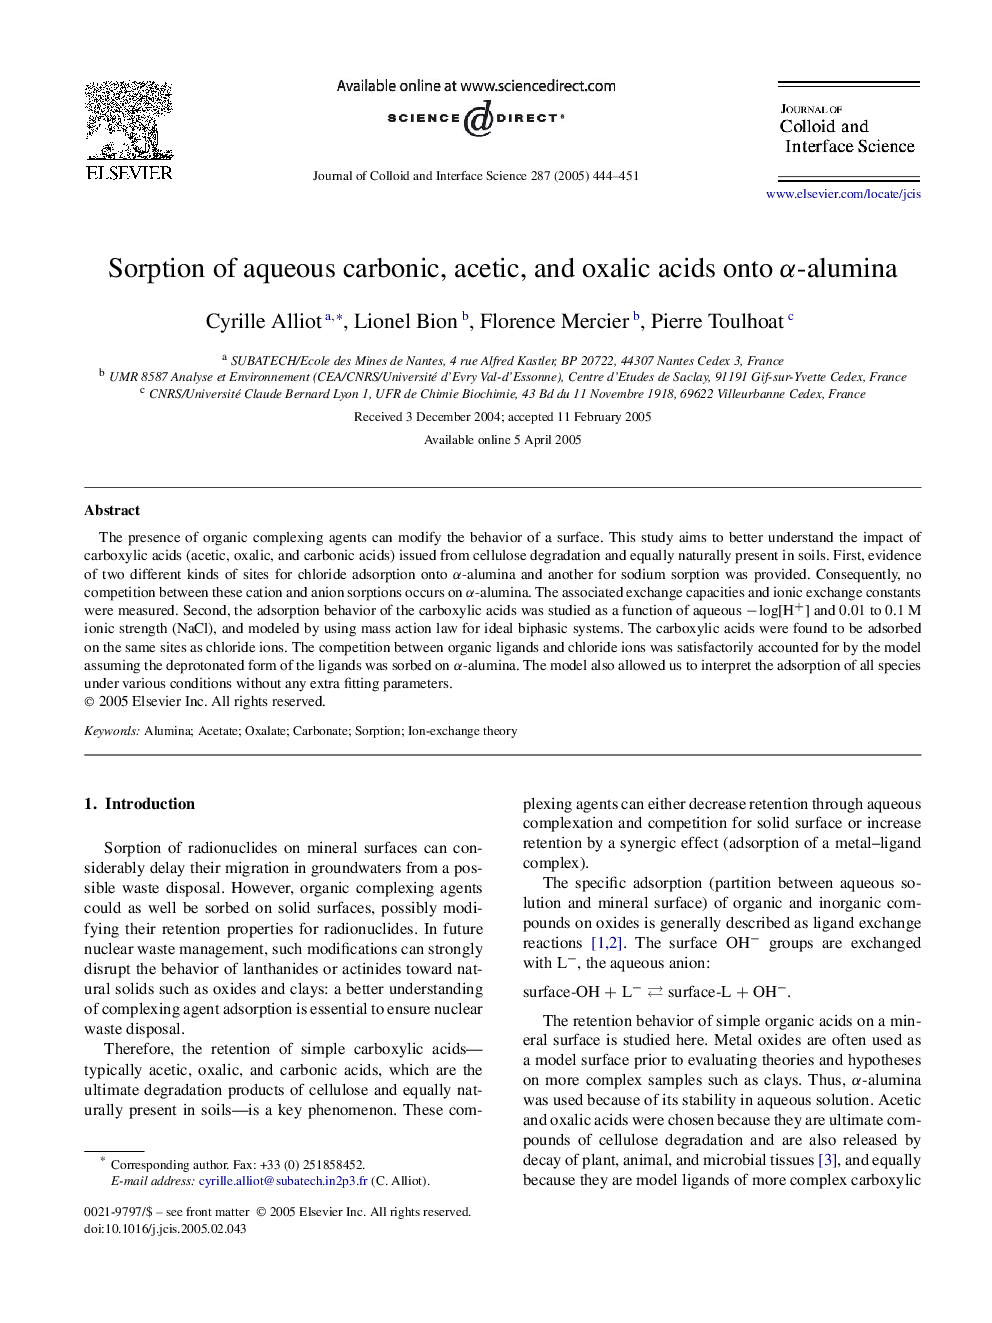 Sorption of aqueous carbonic, acetic, and oxalic acids onto Î±-alumina